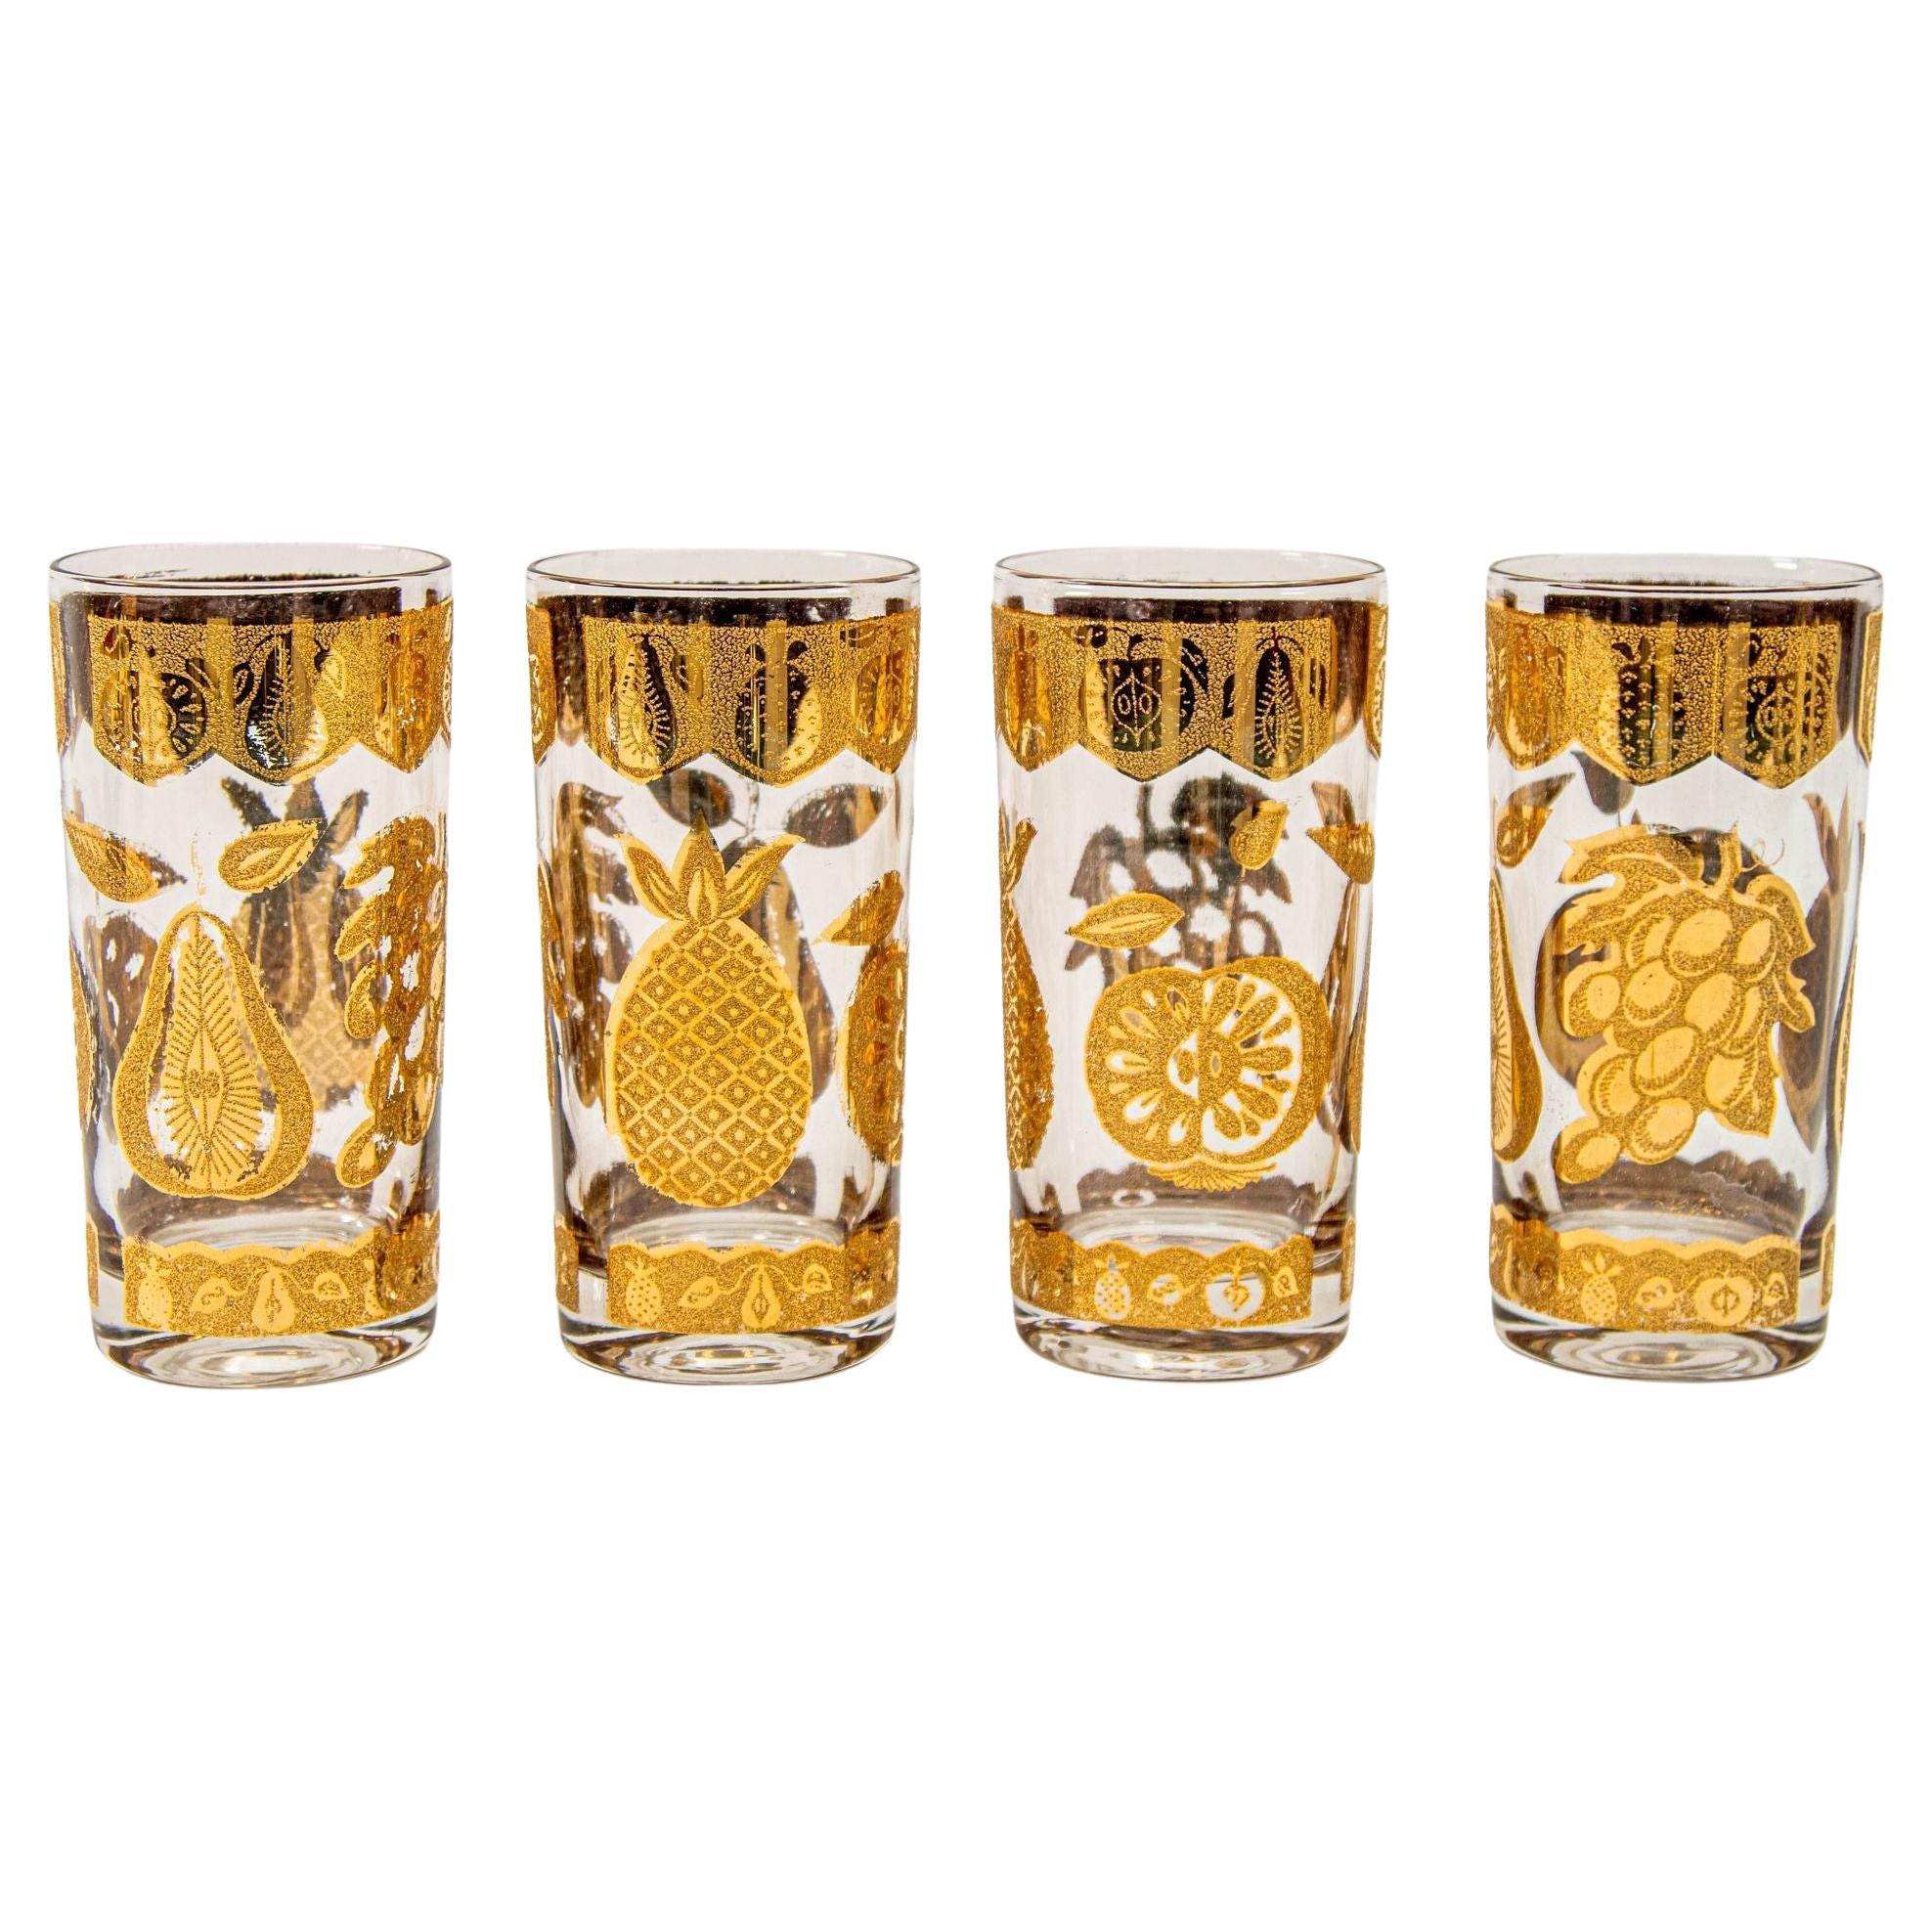 https://a.1stdibscdn.com/1960s-culver-cocktail-glasses-with-22-karat-gold-florentine-pattern-set-of-four-for-sale/f_9068/f_366442121697473657851/f_36644212_1697473658575_bg_processed.jpg